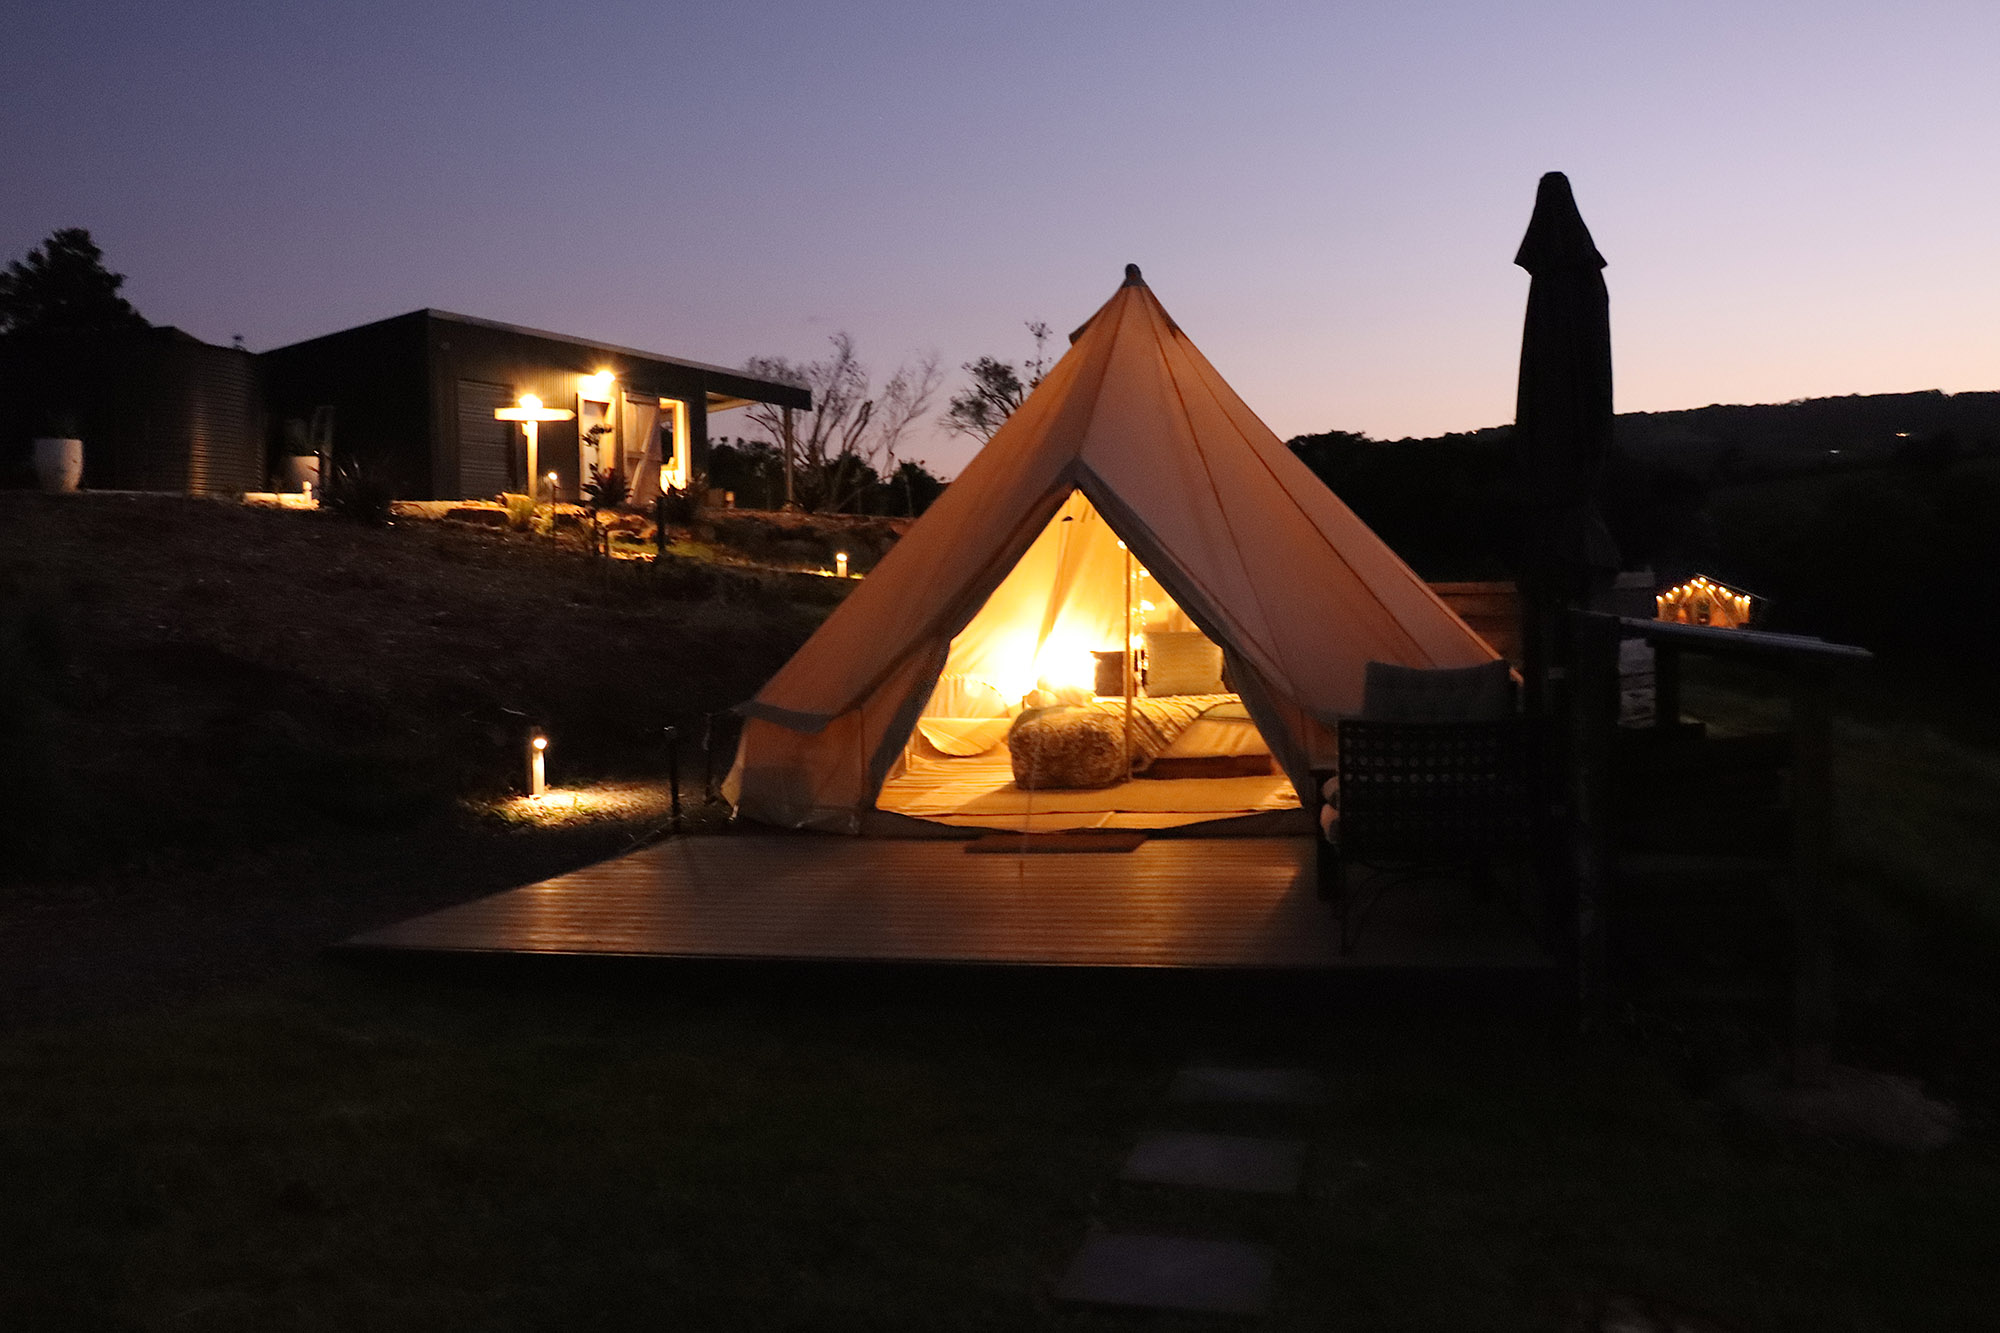 Cicada Luxury Camping | campground | 127 Jerrara Rd, Jerrara NSW 2533, Australia | 0400991452 OR +61 400 991 452